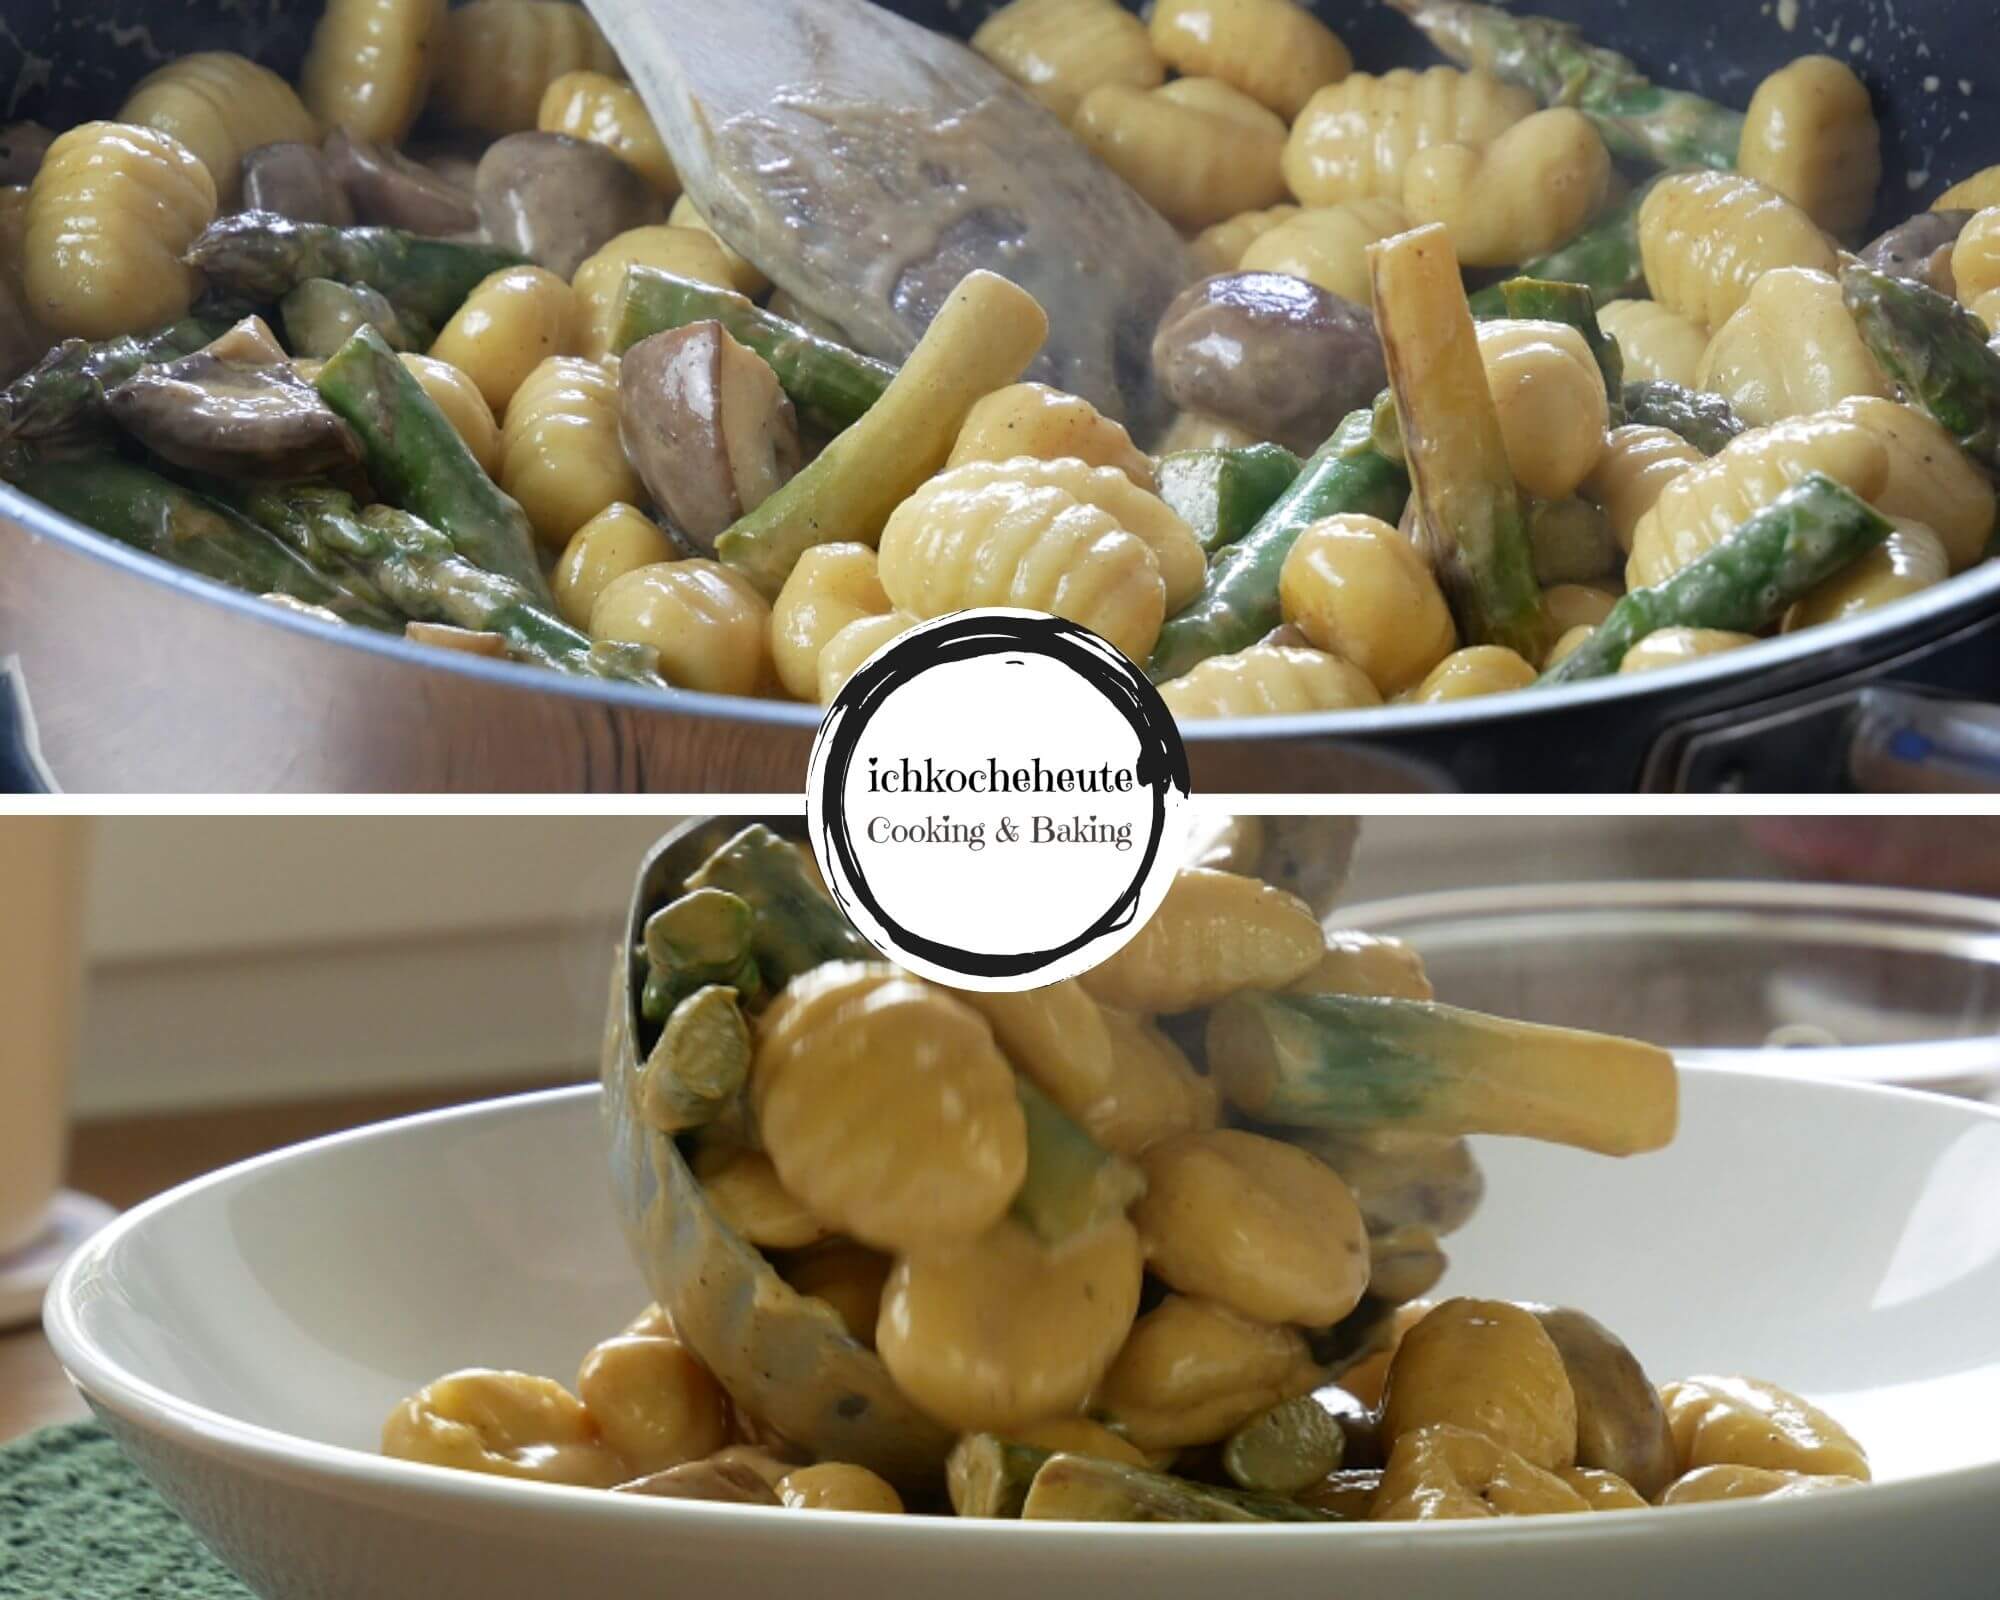 Serving Simple Gnocchi Stir Fry with Asparagus & Mushrooms